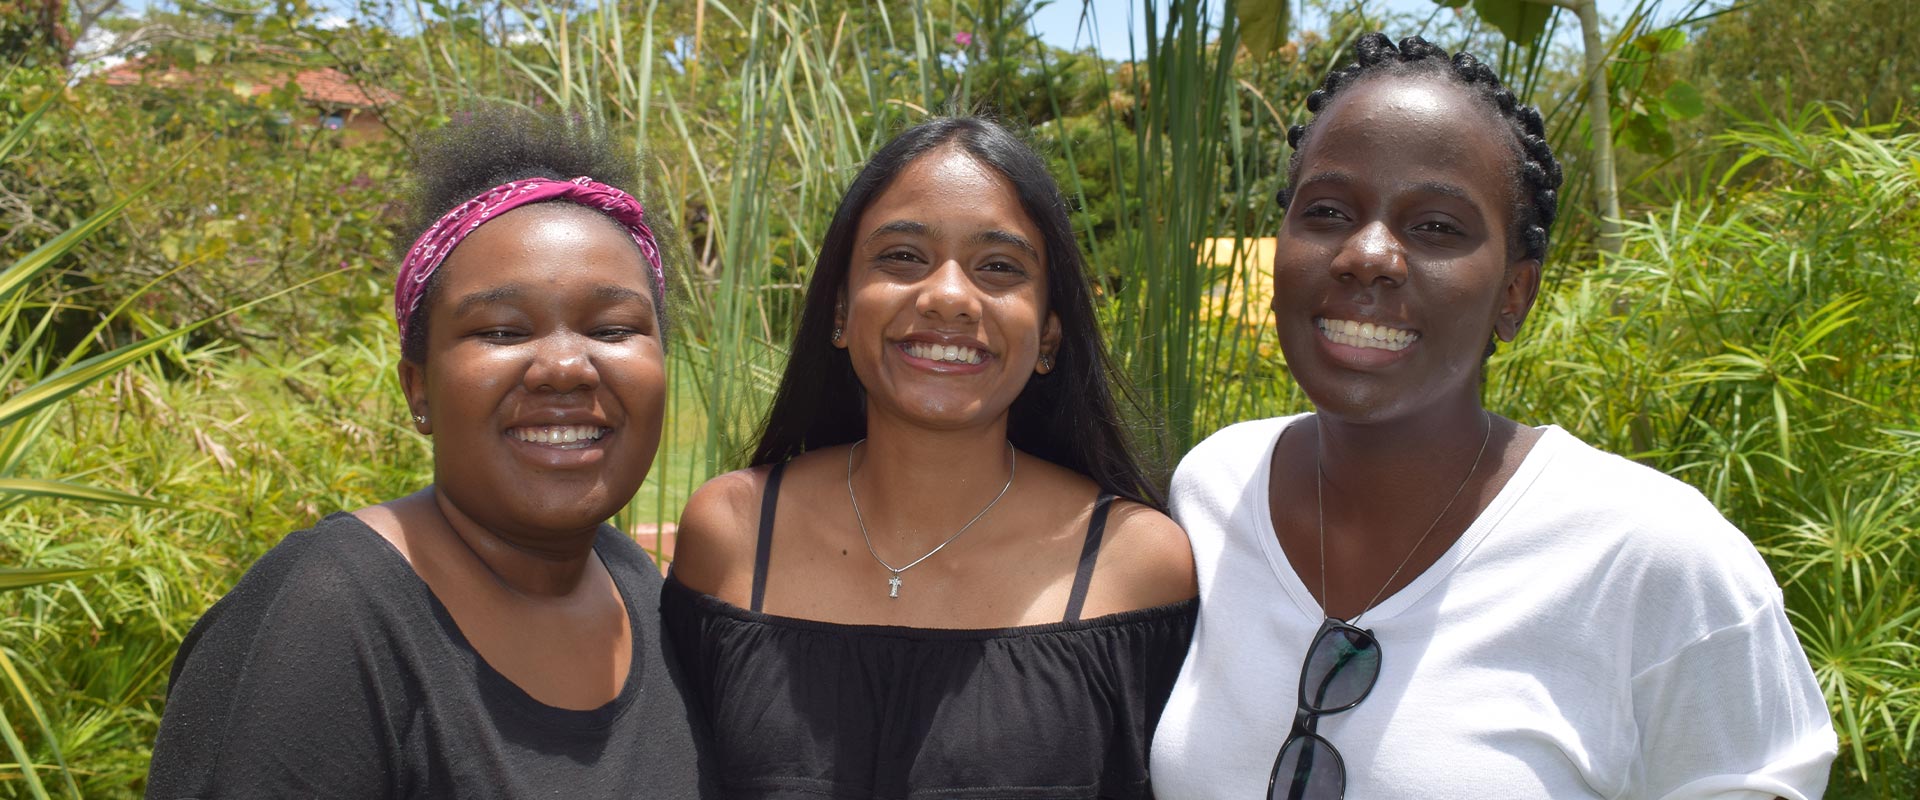 Three ISU alumni stood smiling